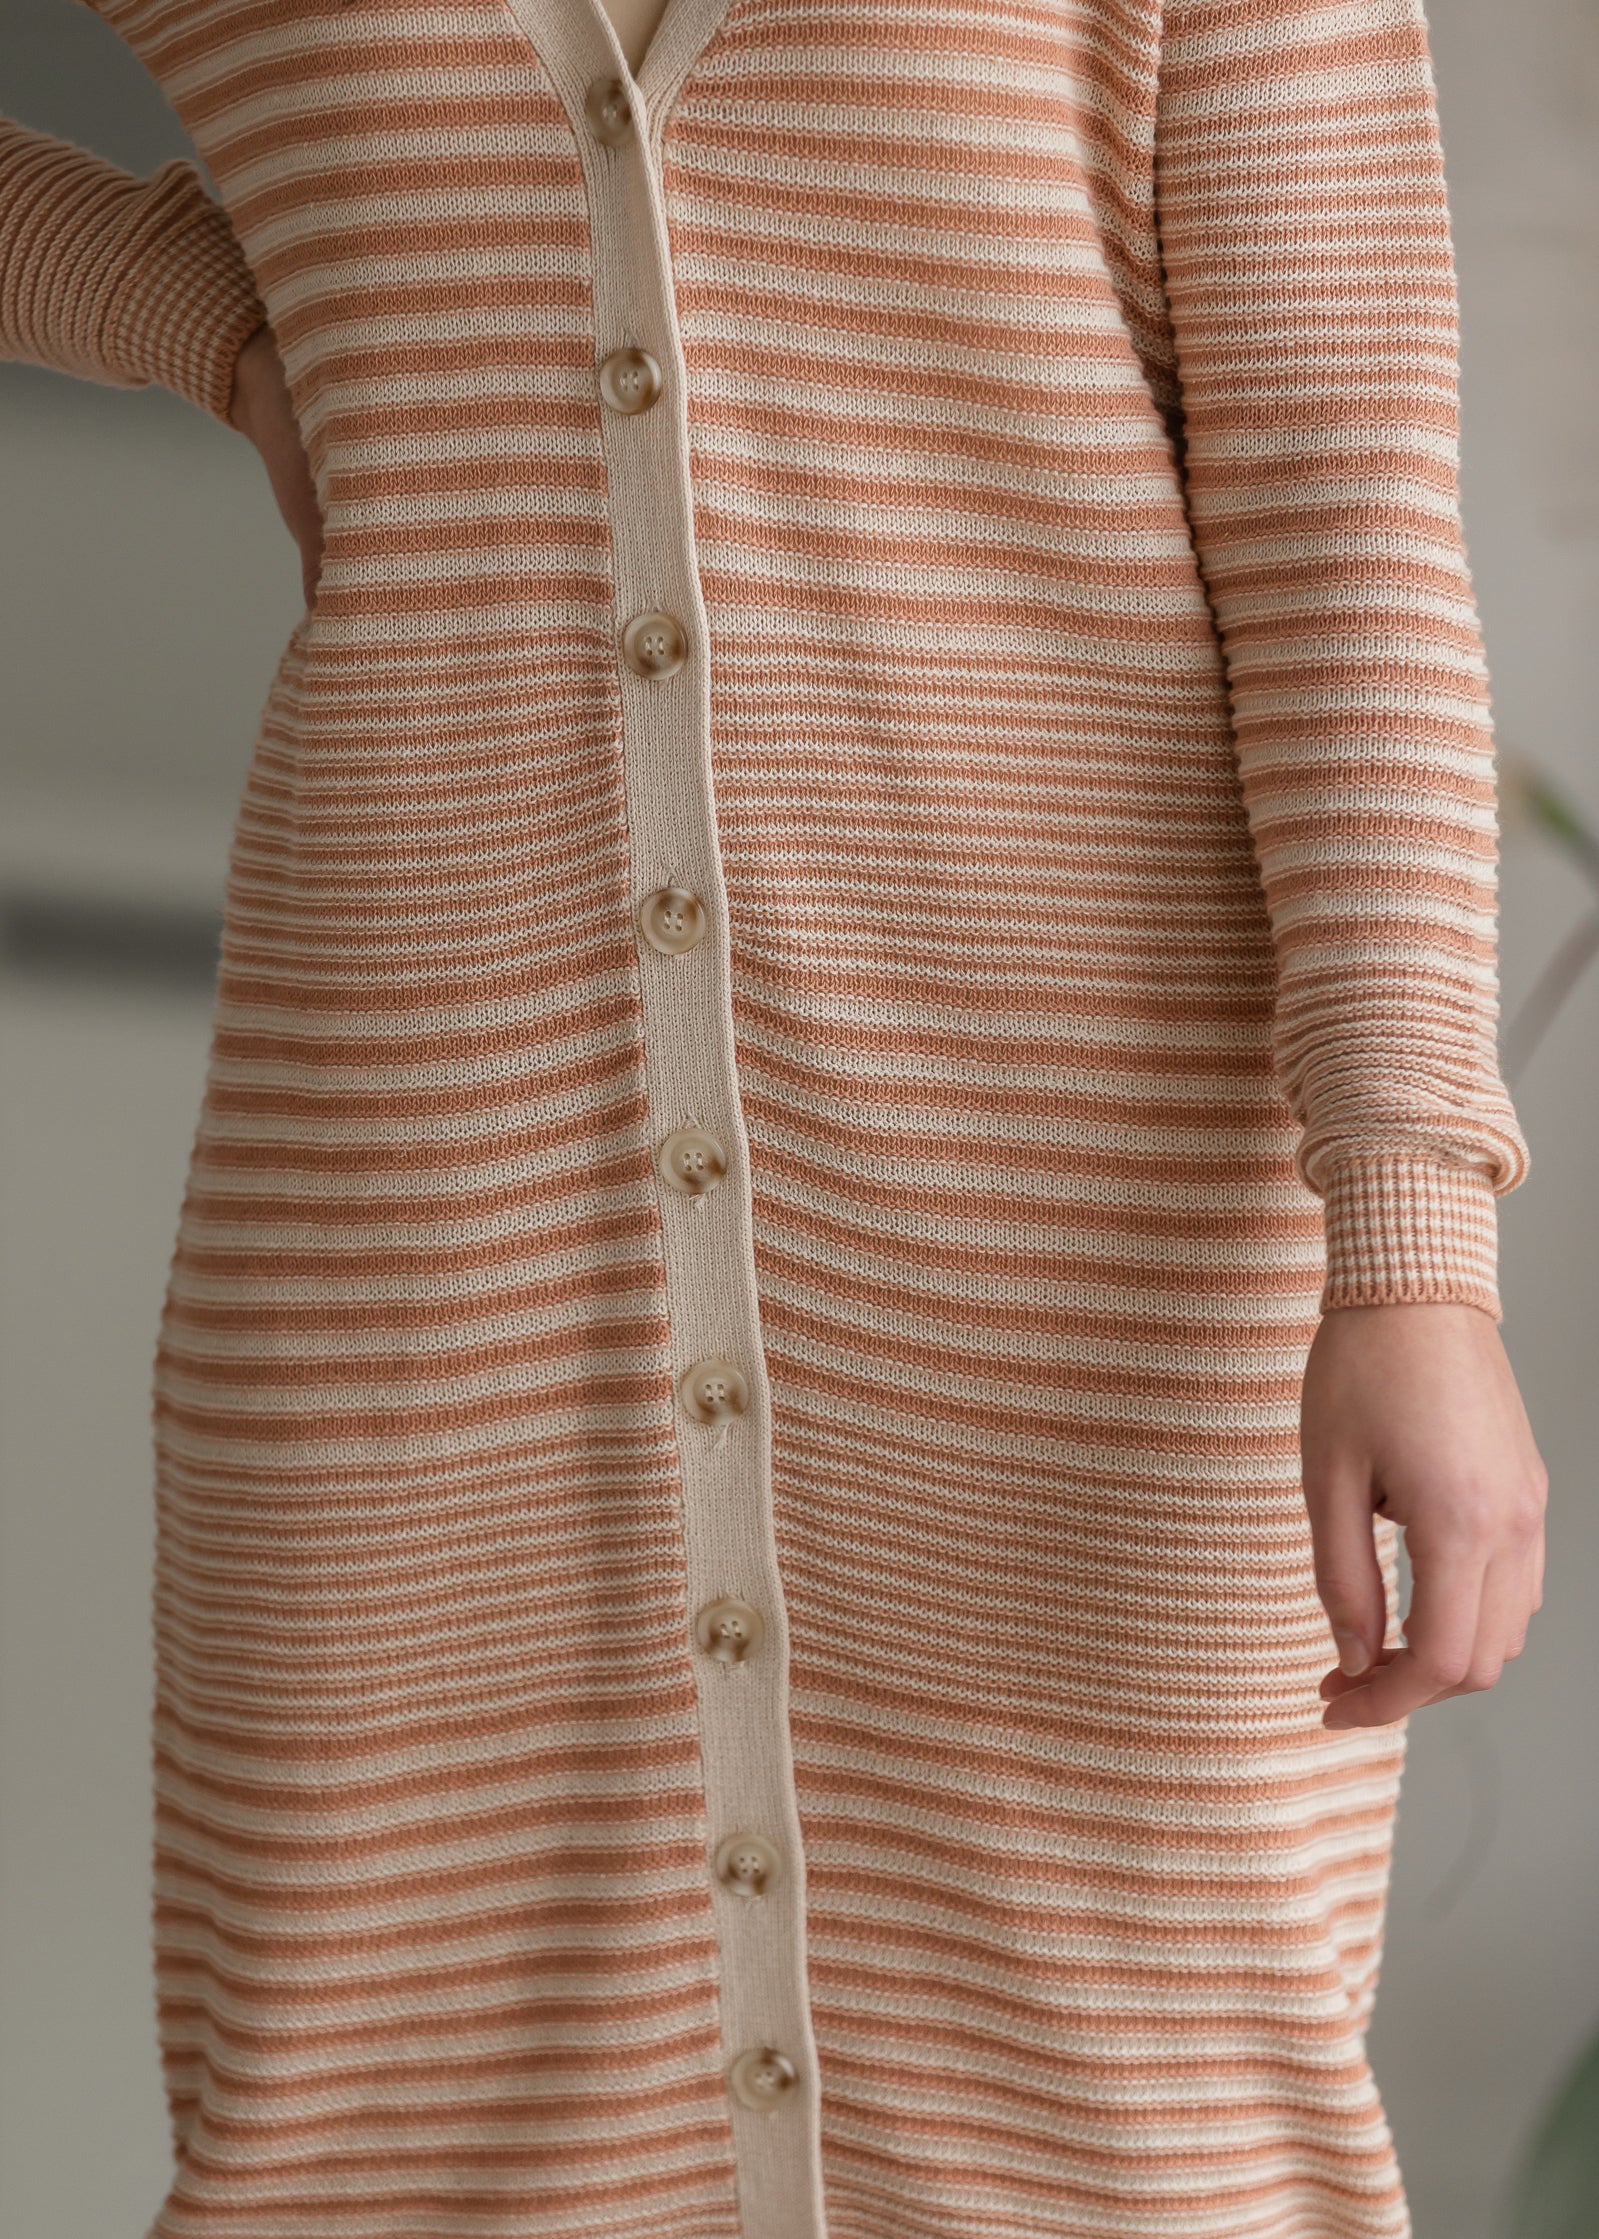 Striped Shellie Long Sleeve Cardigan Dress Shirt Heartloom